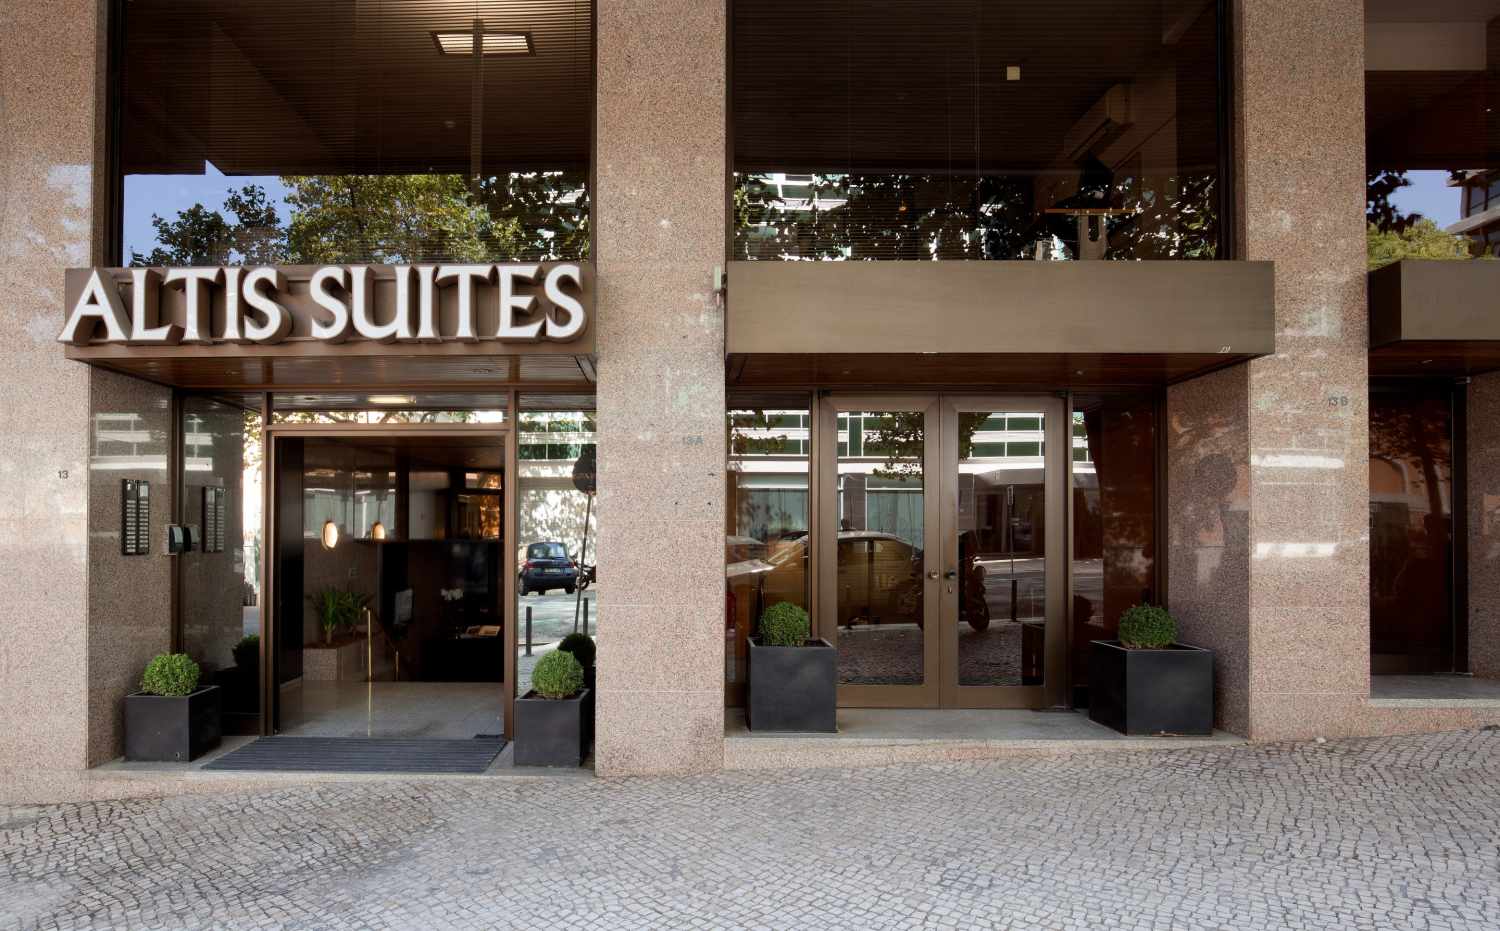 Altis Suites Hotel de Apartamentos, Lissabon-Stad, Lissabon, Portugal